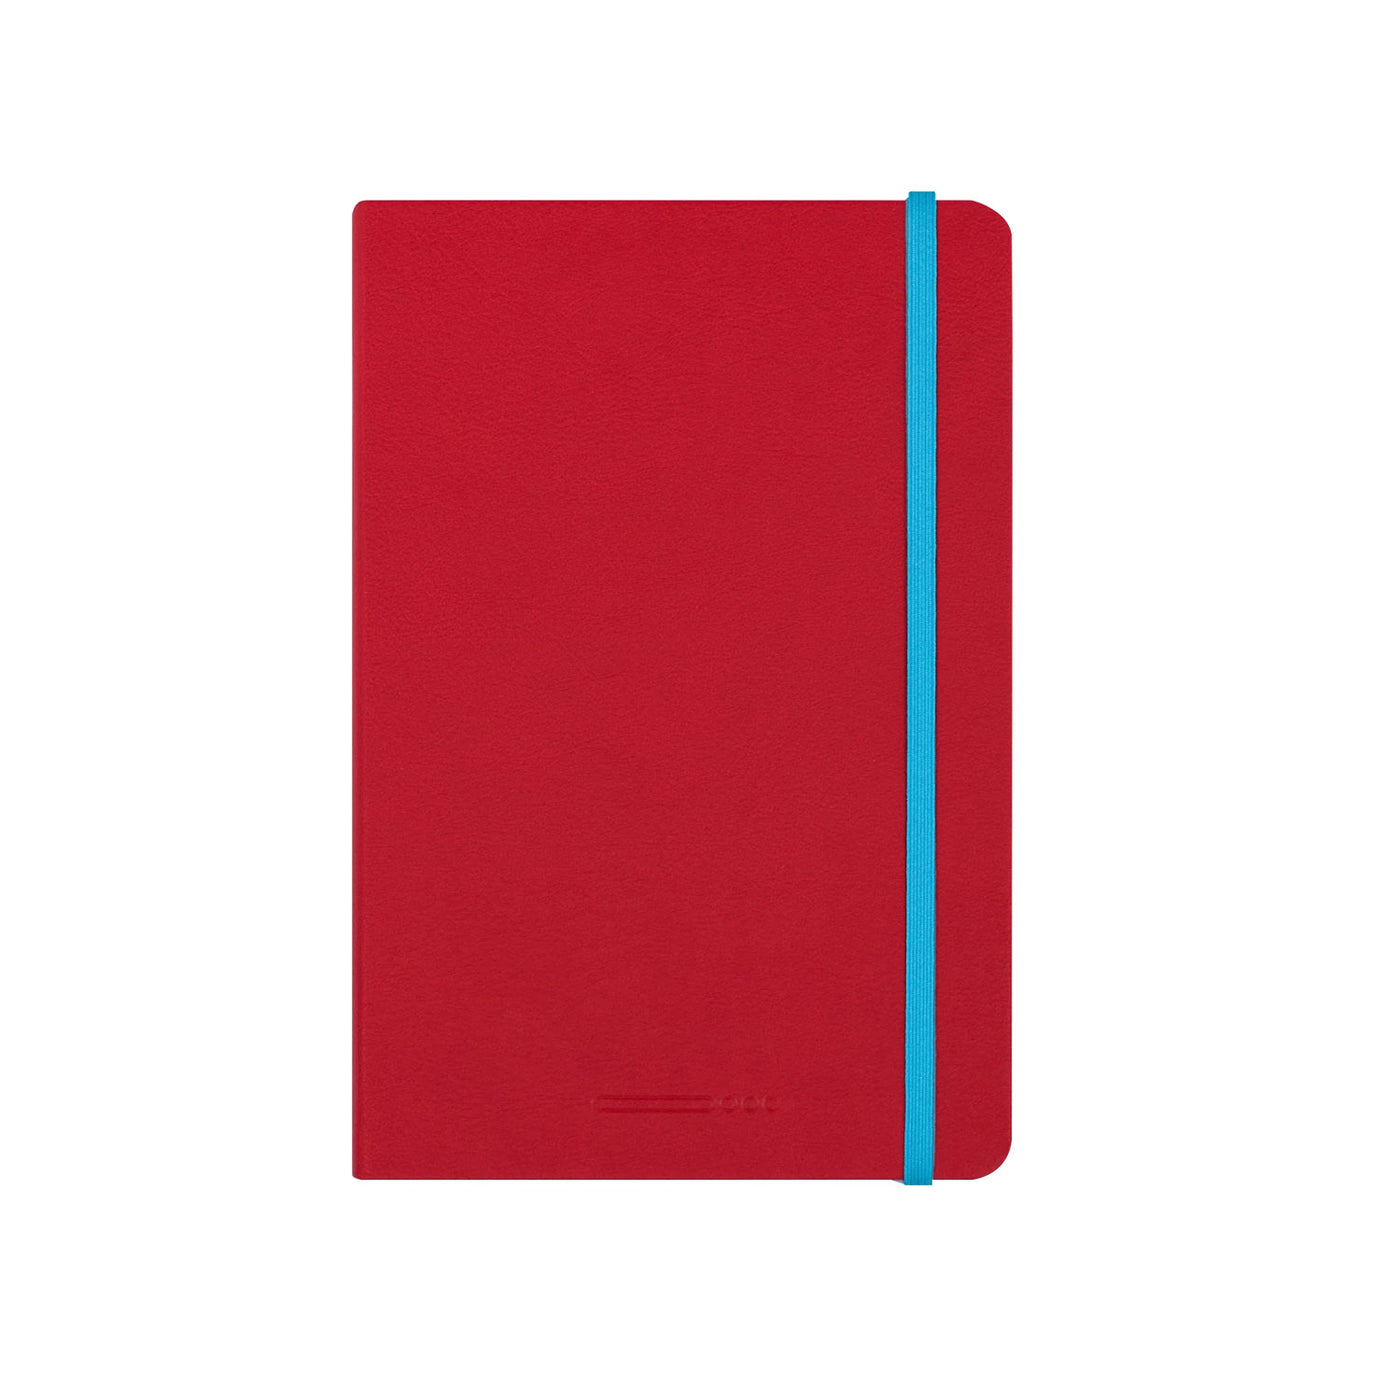 Endless Recorder Crimson Sky Red Regalia Notebook - A5 Ruled 3